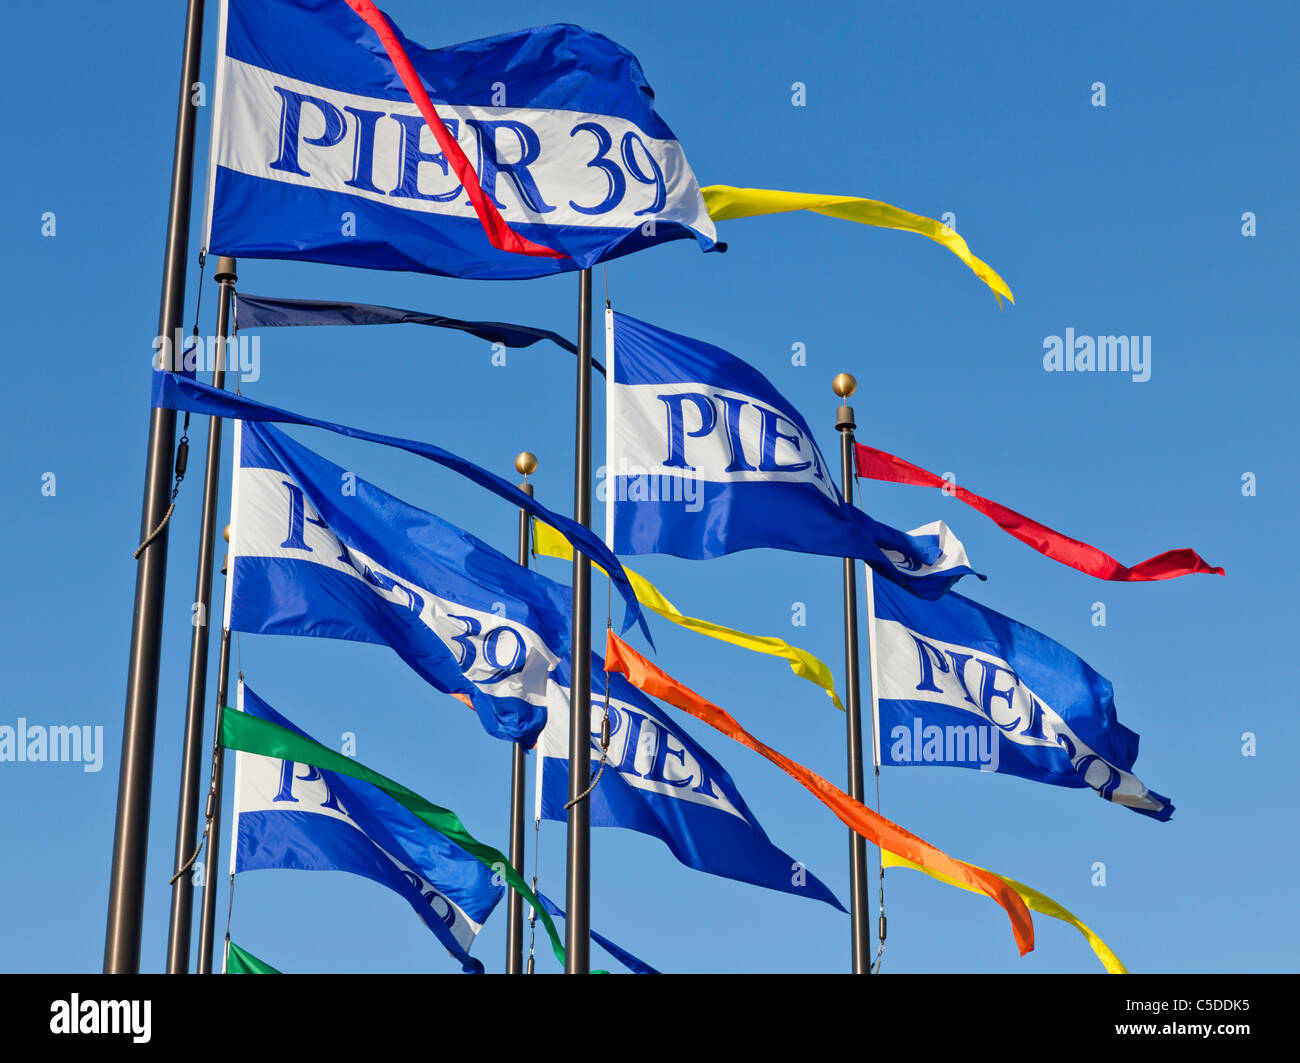 Pier 39 flags San francisco california united states of america usa Stock Photo